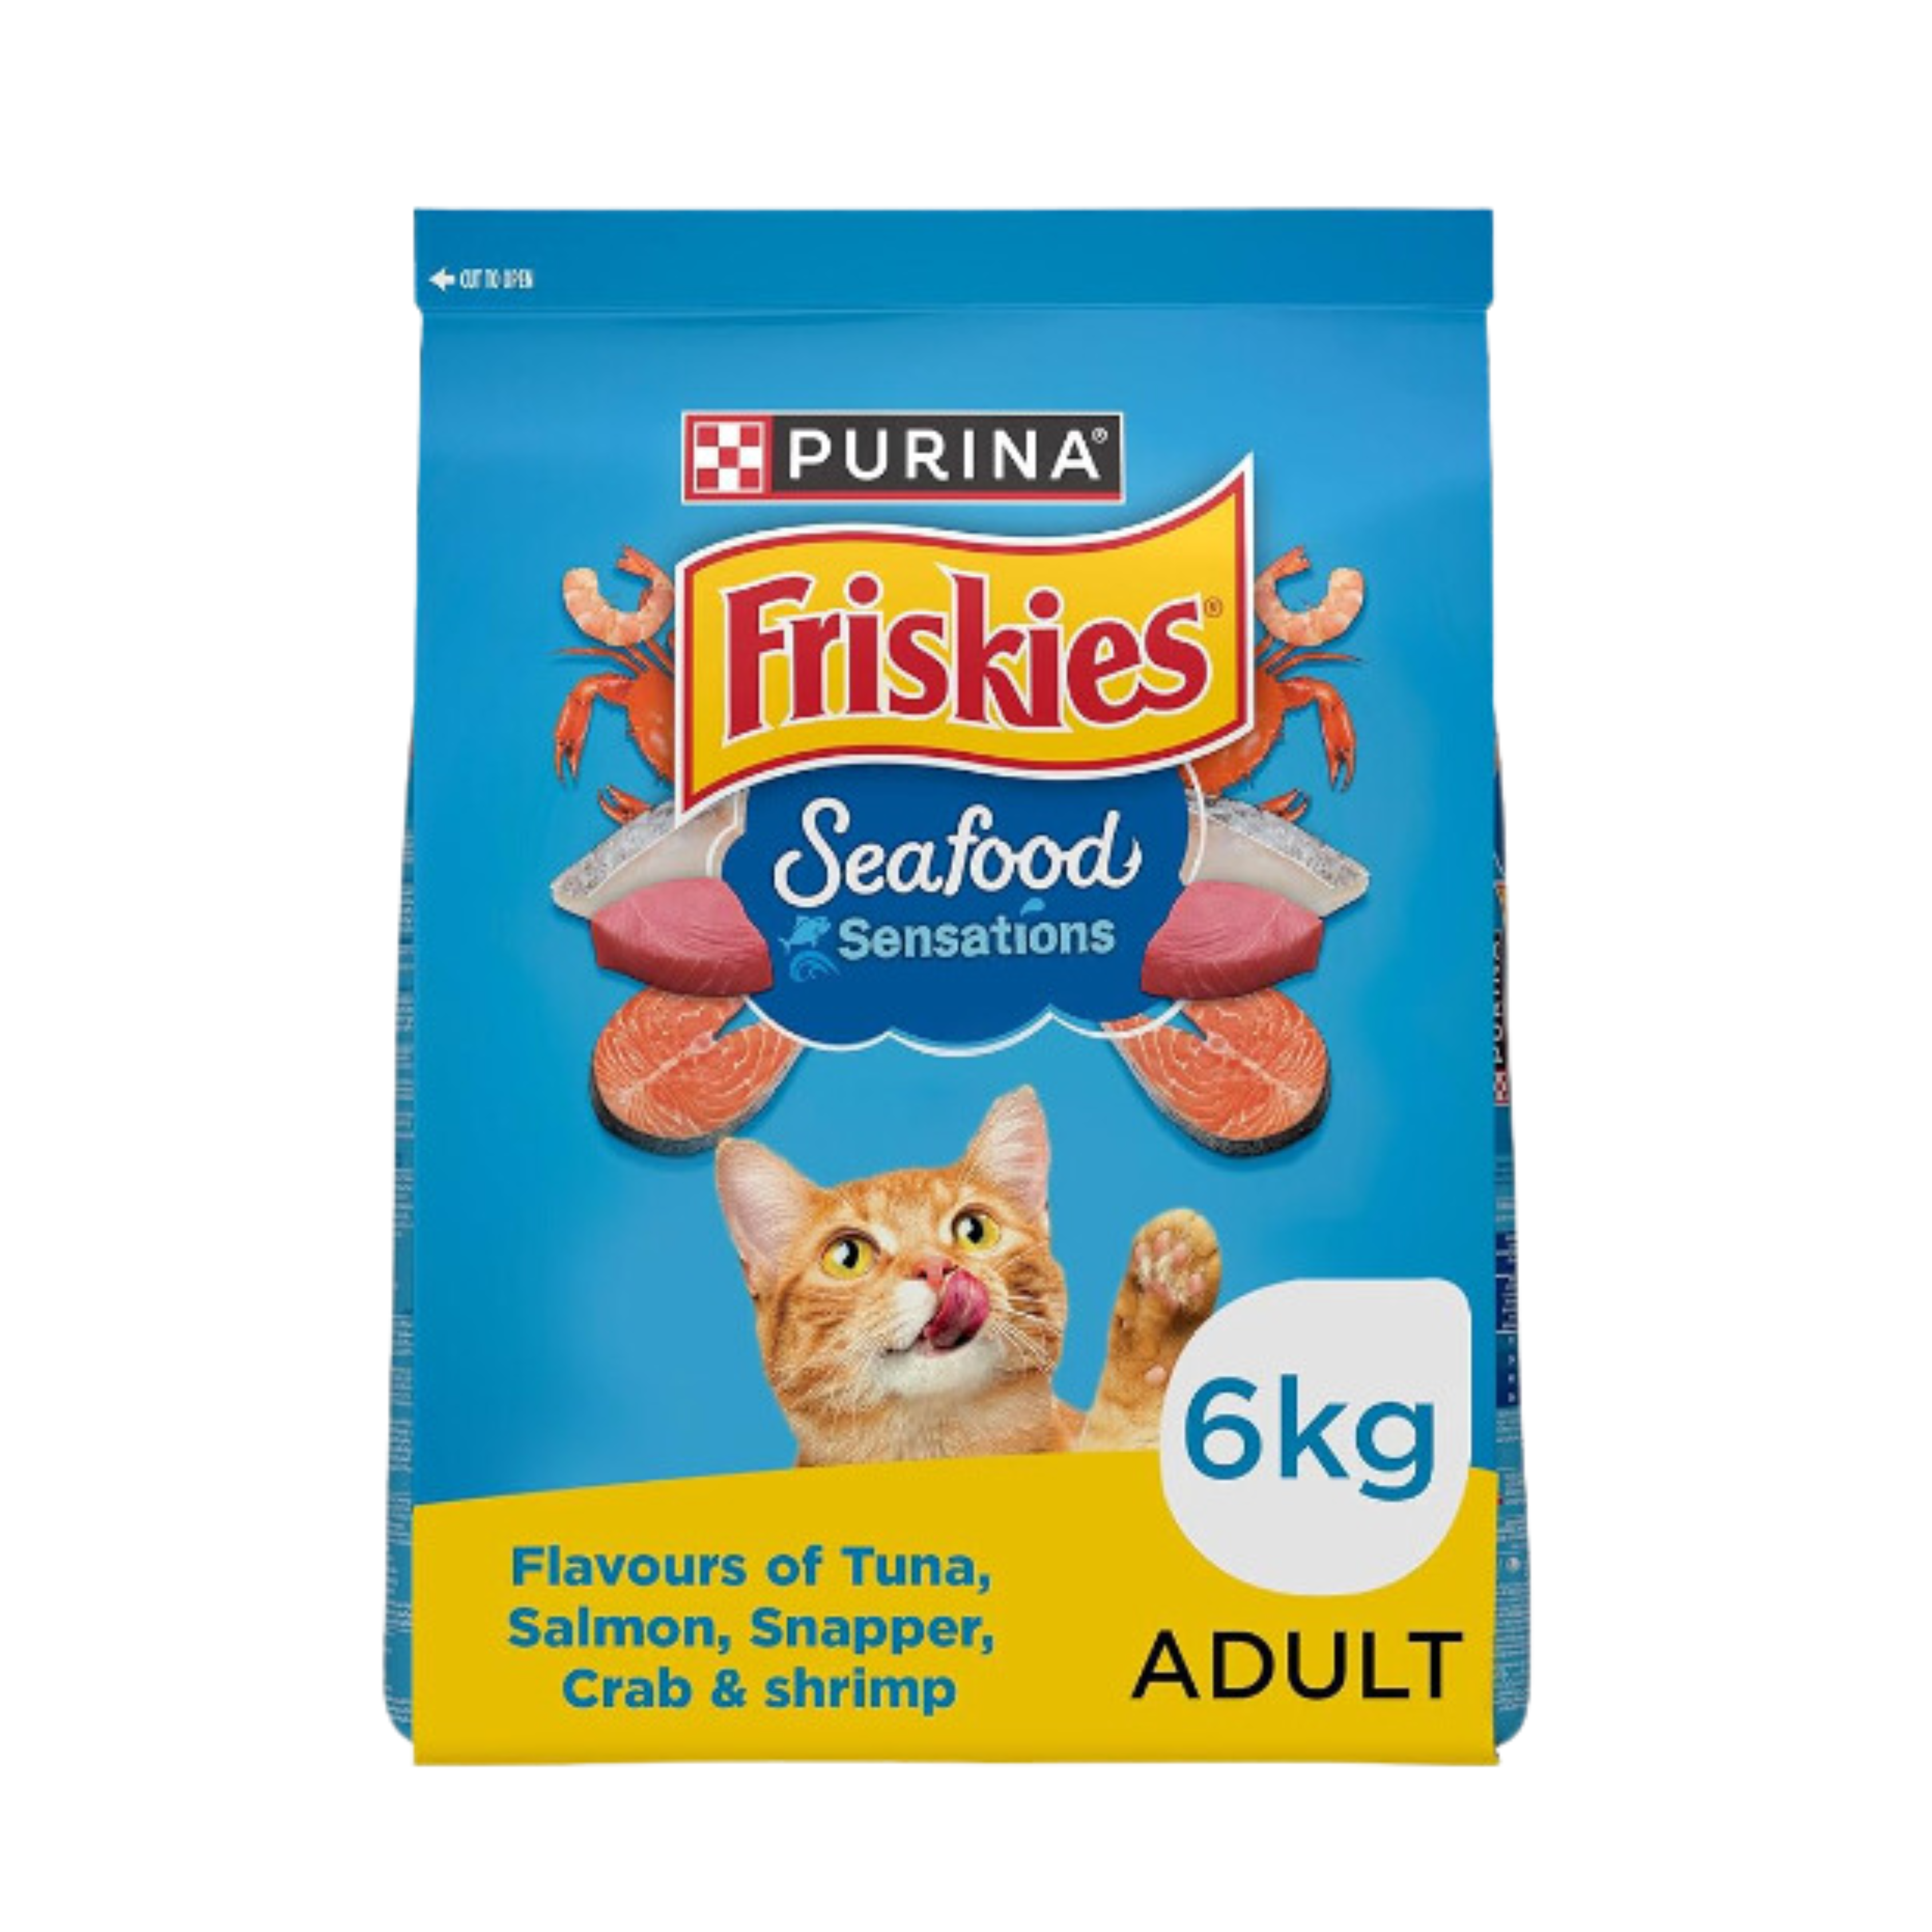 PURINA Friskies Seafood Sensations 6kg